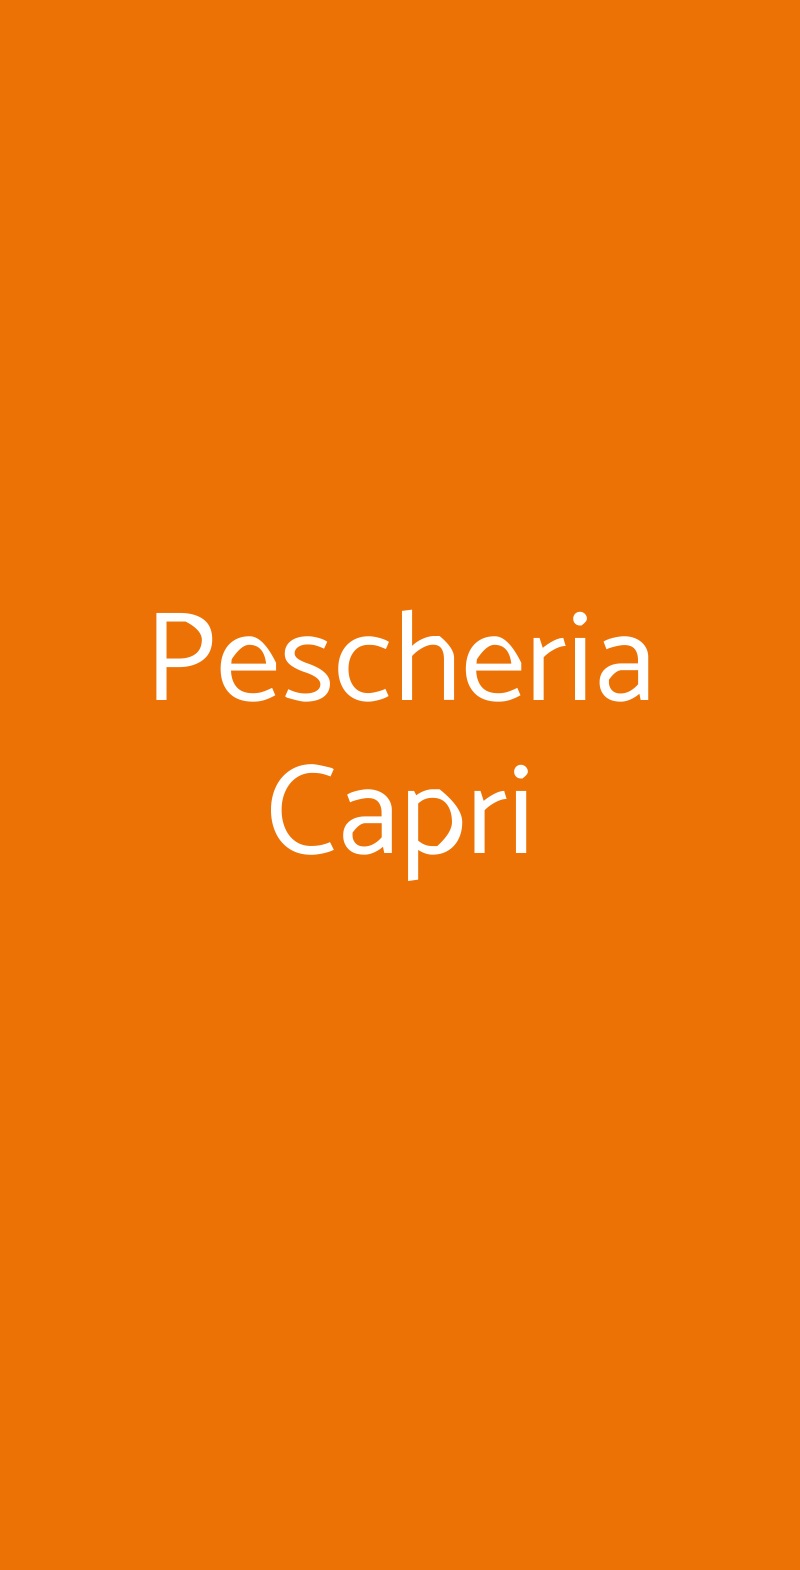 Pescheria Capri Napoli menù 1 pagina